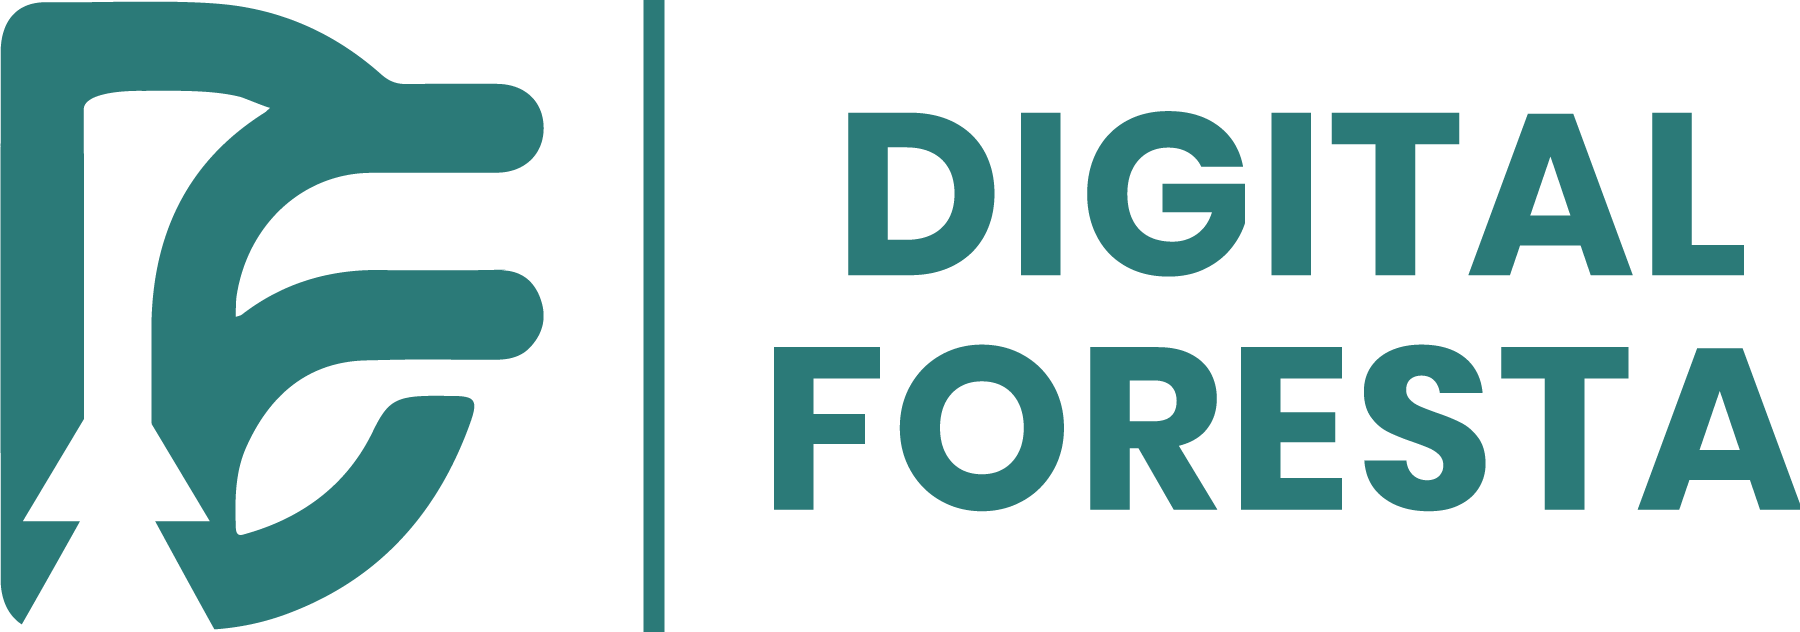 Digital Foresta Logo